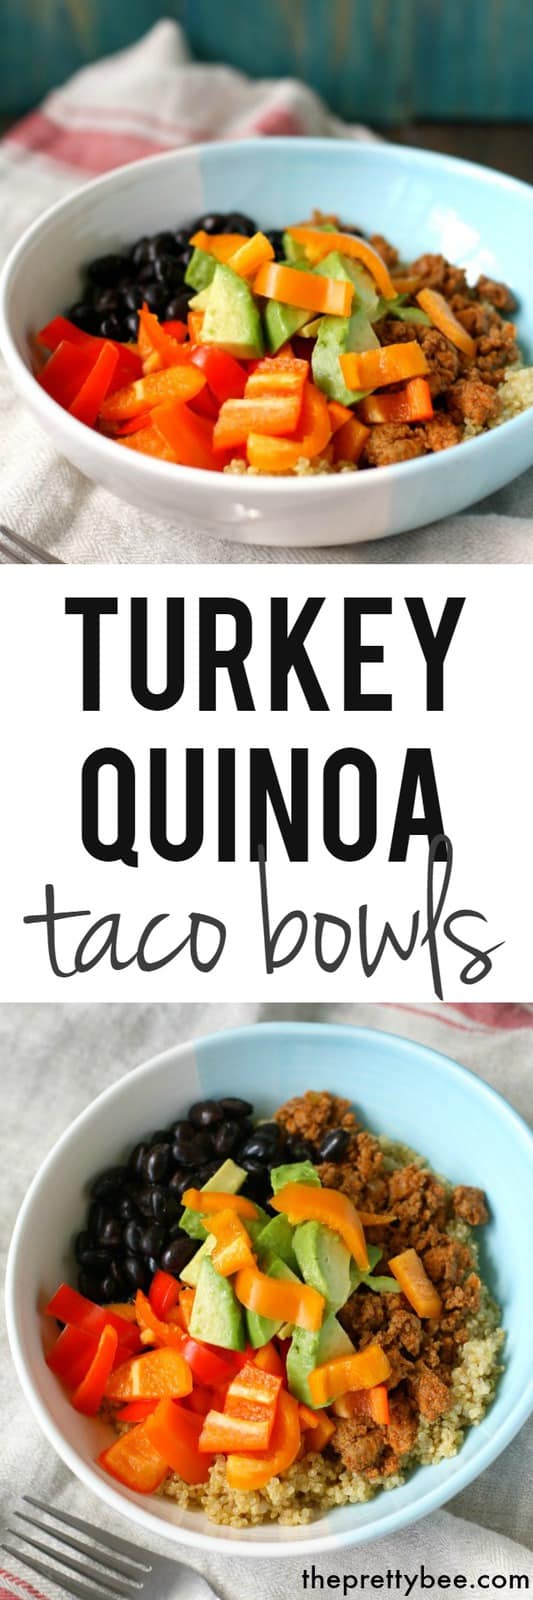 easy turkey taco bowls